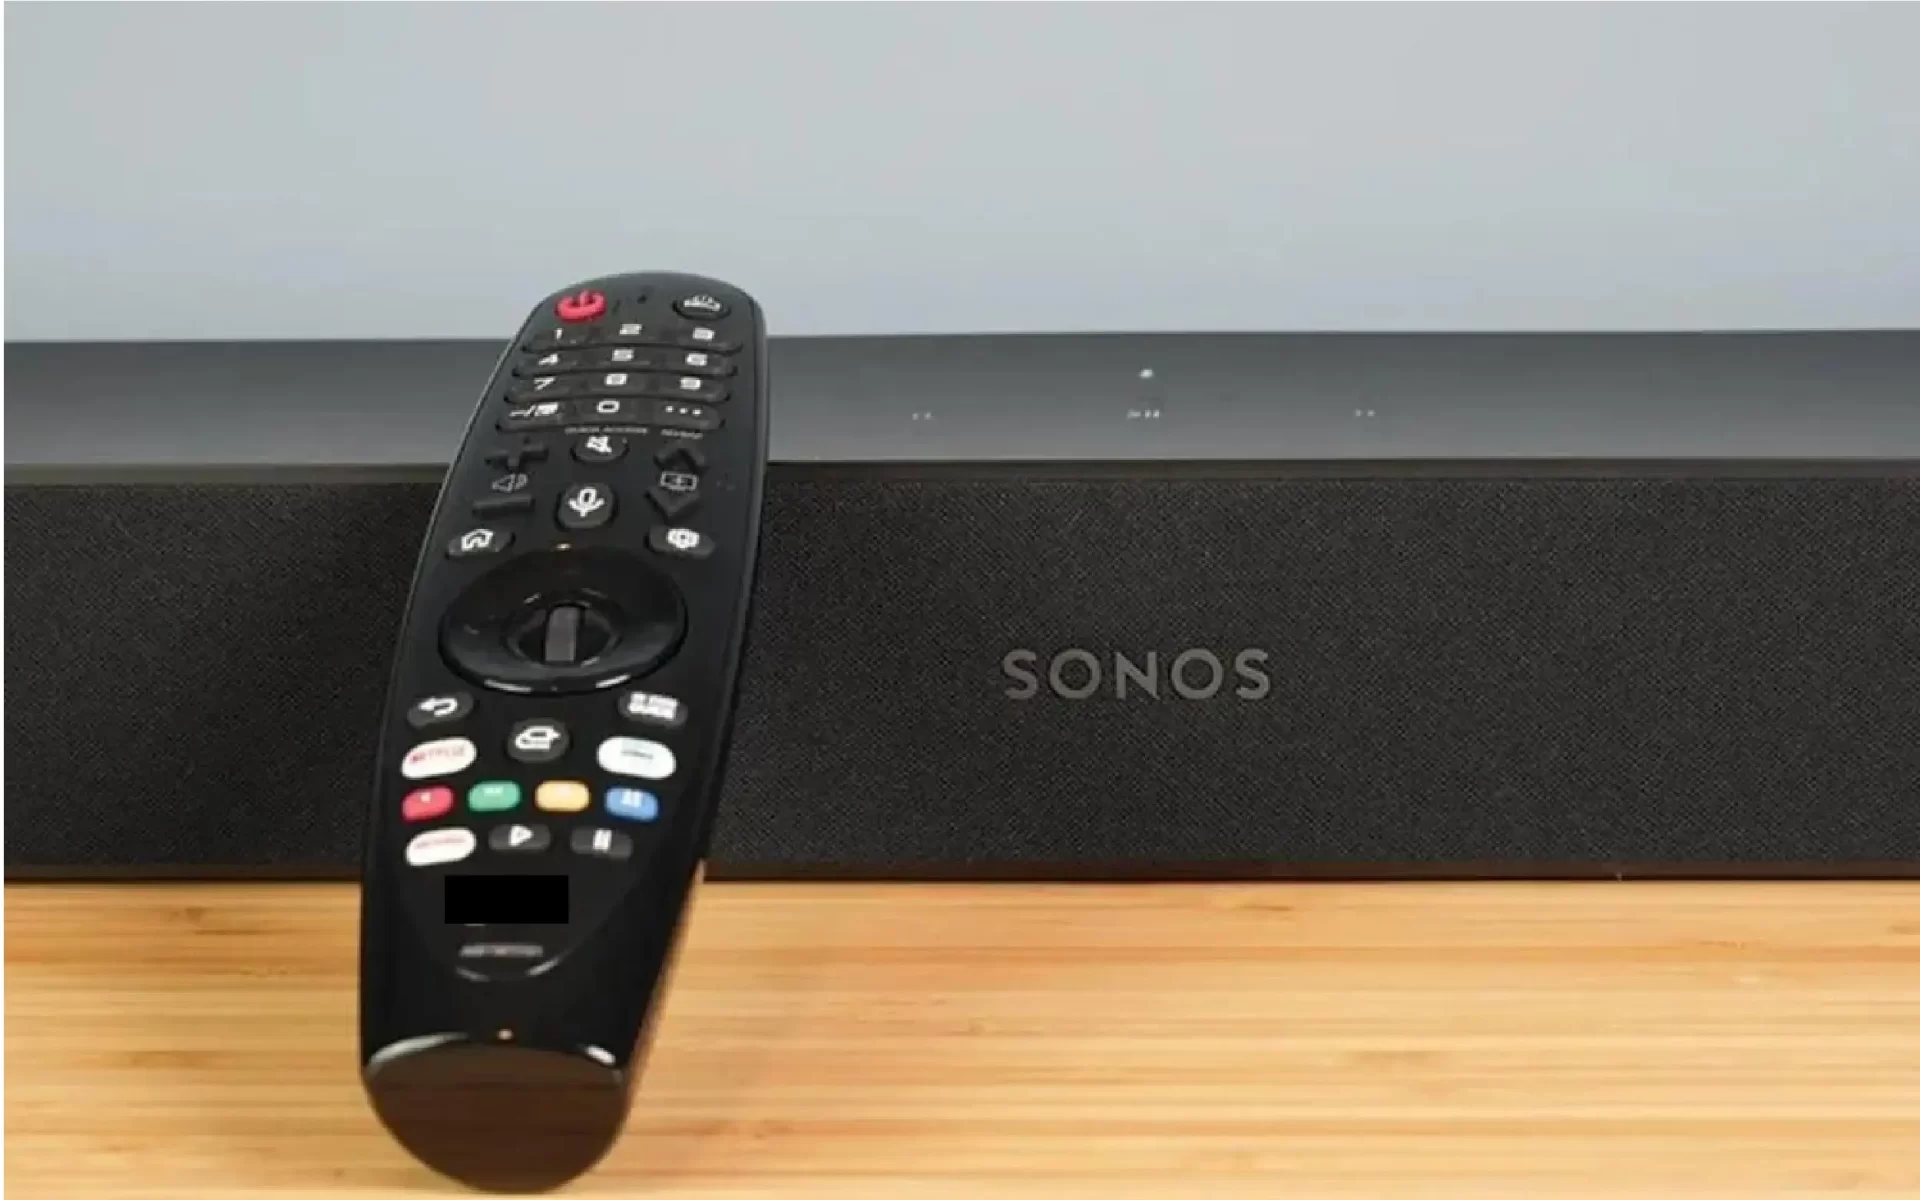 Sonos Soundbar Is Not Working?